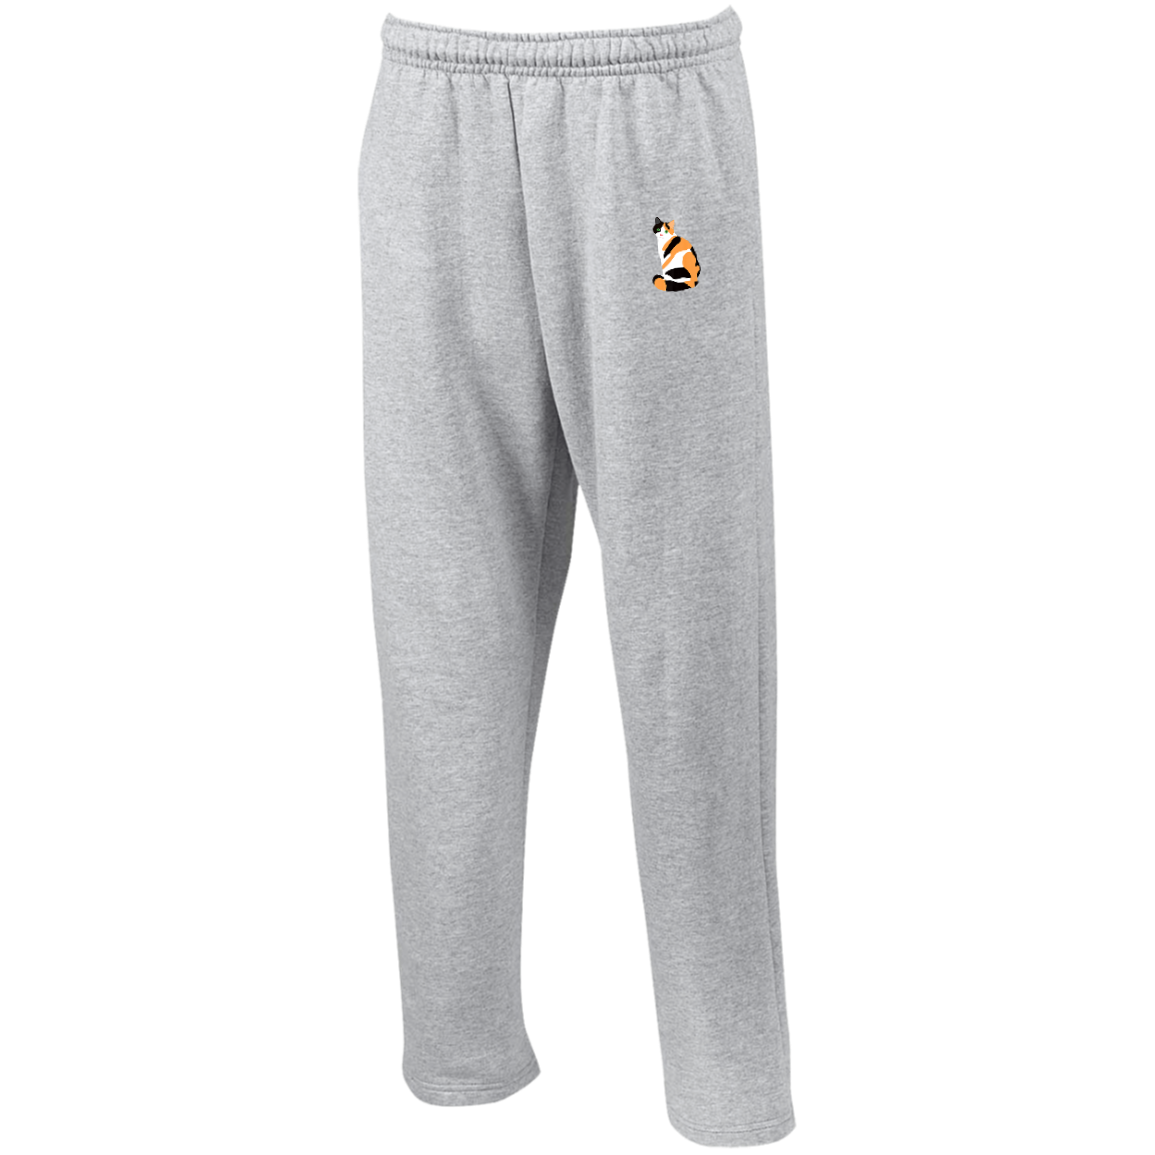 Calico Gift Premium Pants